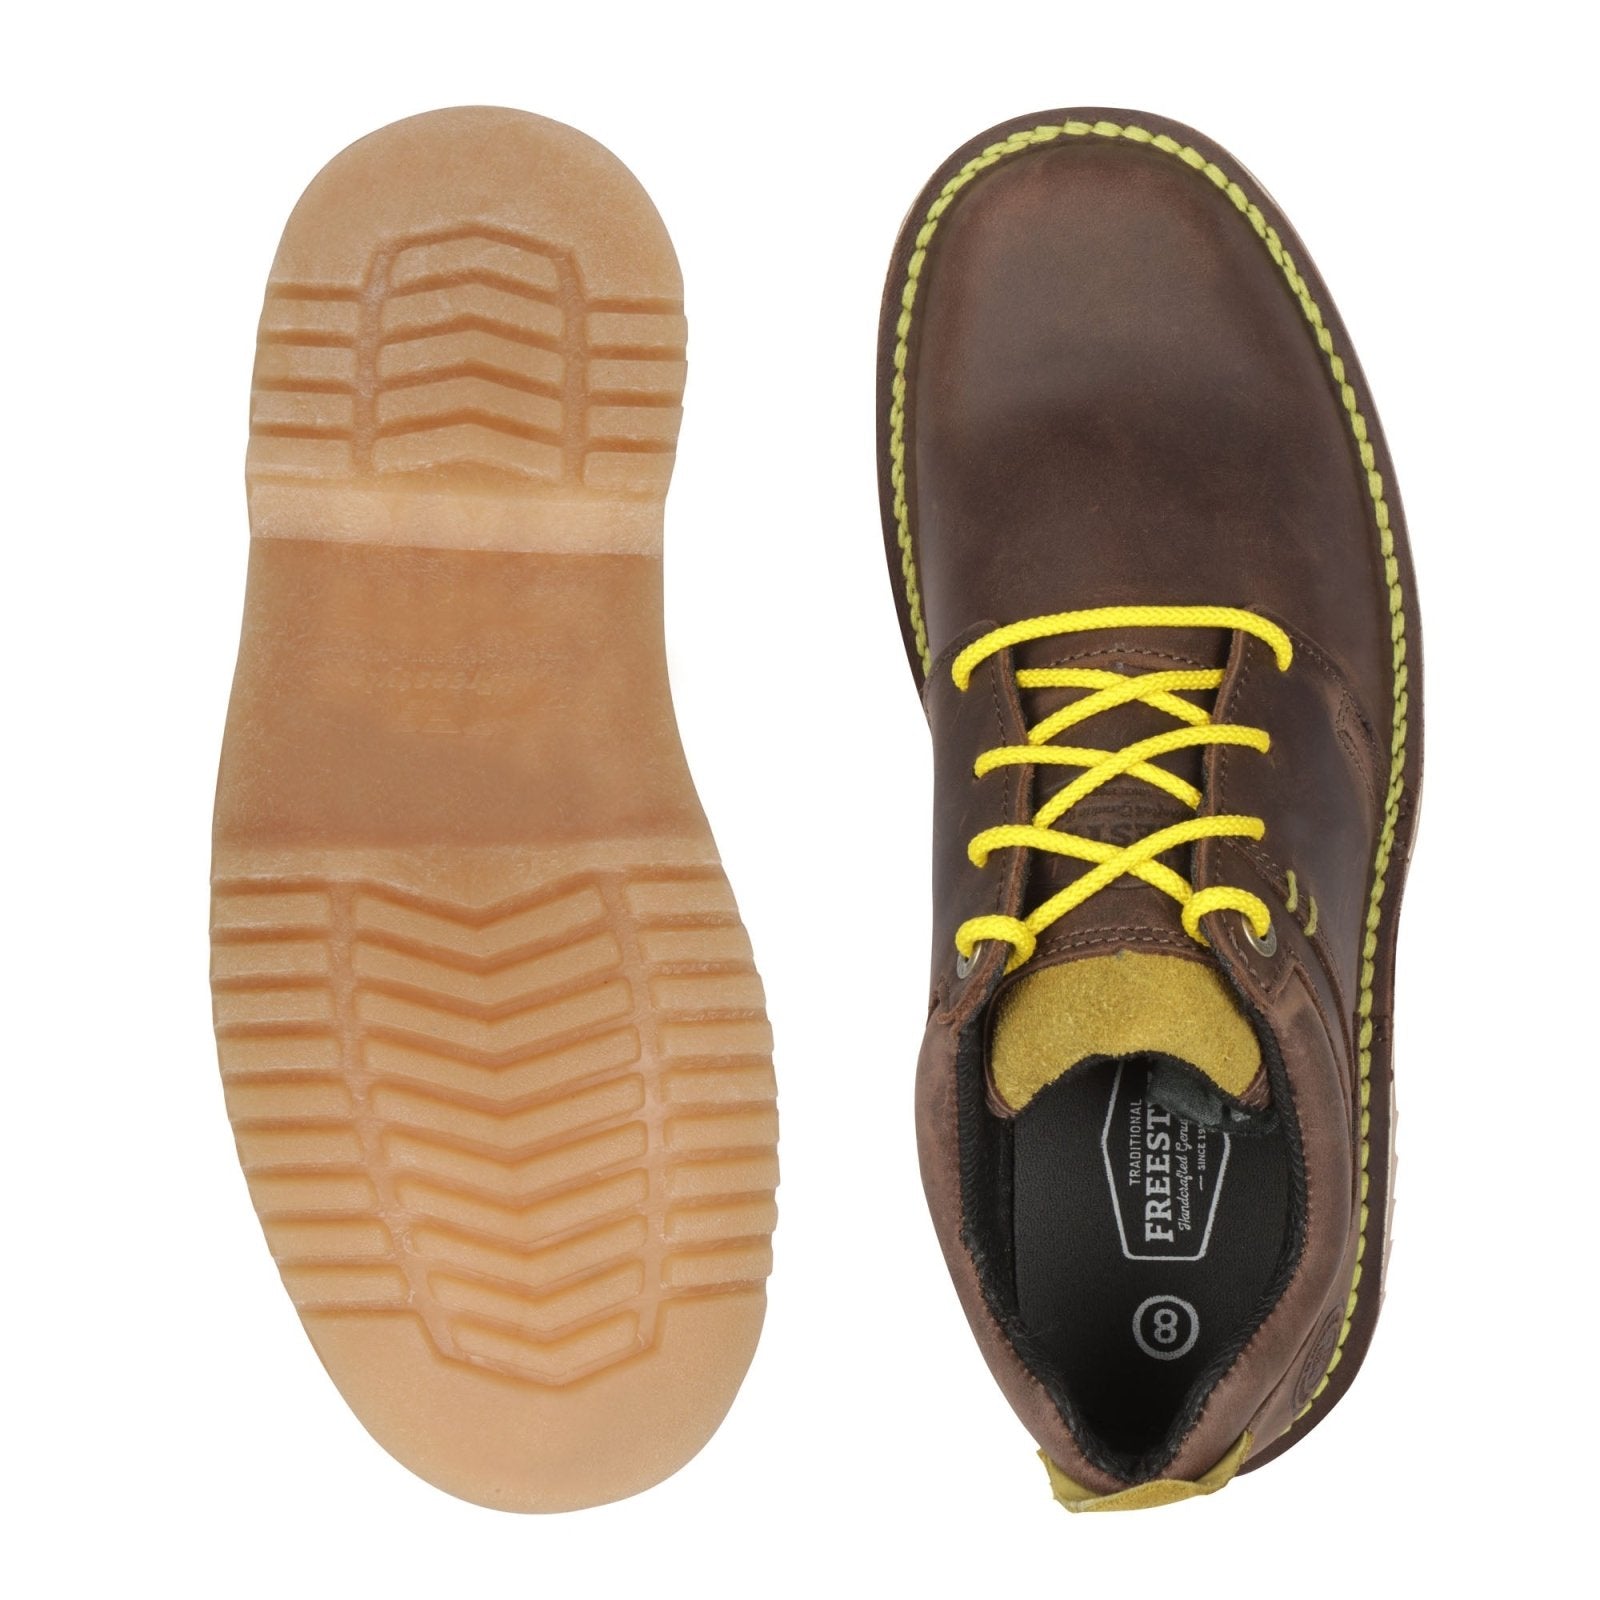 Karakal Men's Premium Leather Walking and Everyday Work Shoe - Freestyle SA Proudly local leather boots veldskoens vellies leather shoes suede veldskoens